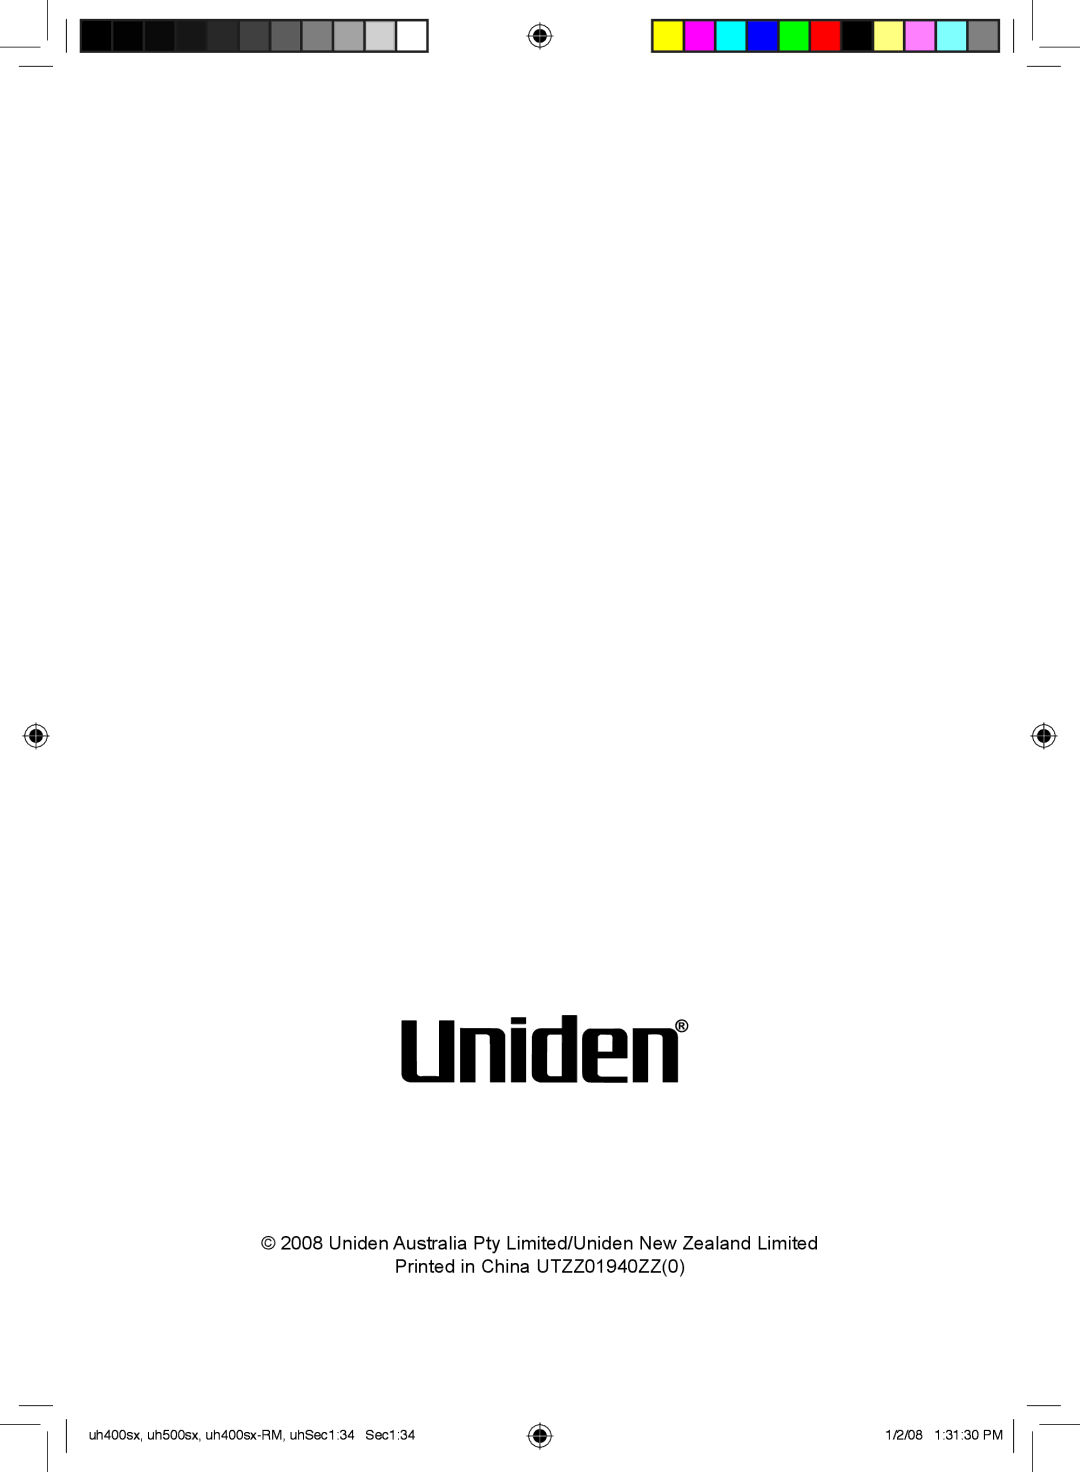 Uniden UH400SX-RM, UH500SX-RM owner manual Uniden Australia Pty Limited/Uniden New Zealand Limited 